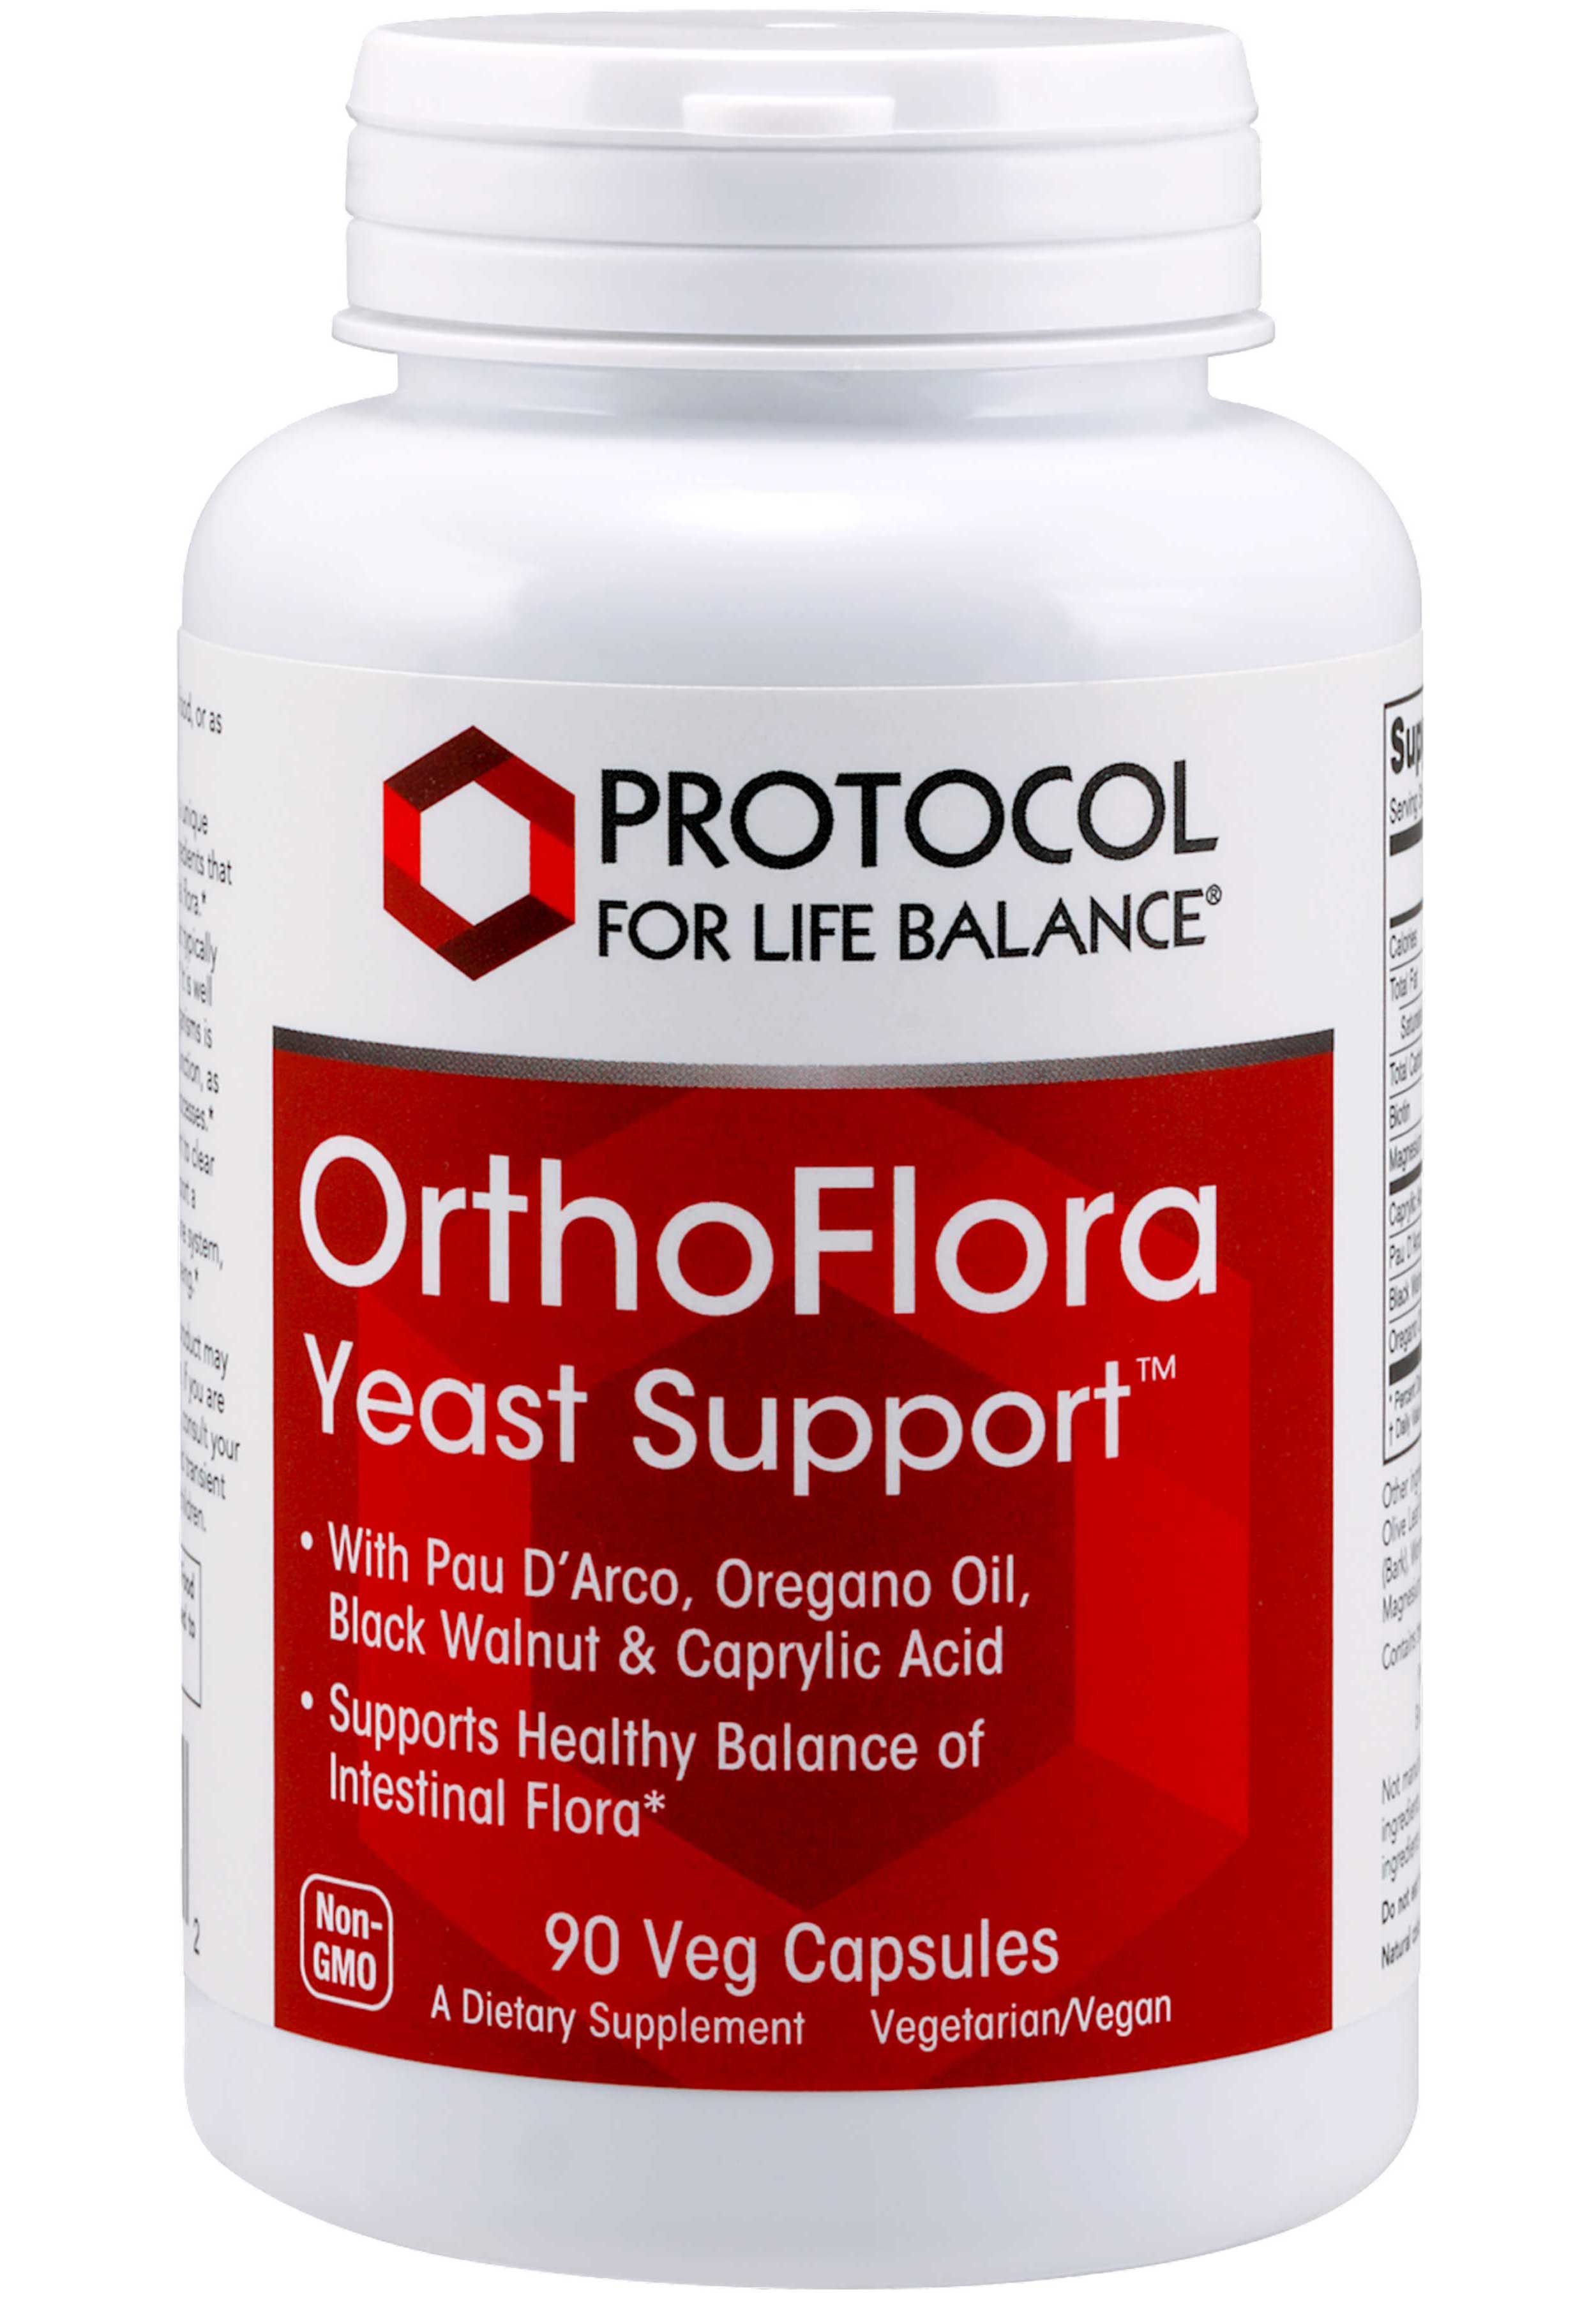 Protocol for Life Balance OrthoFlora Yeast Support